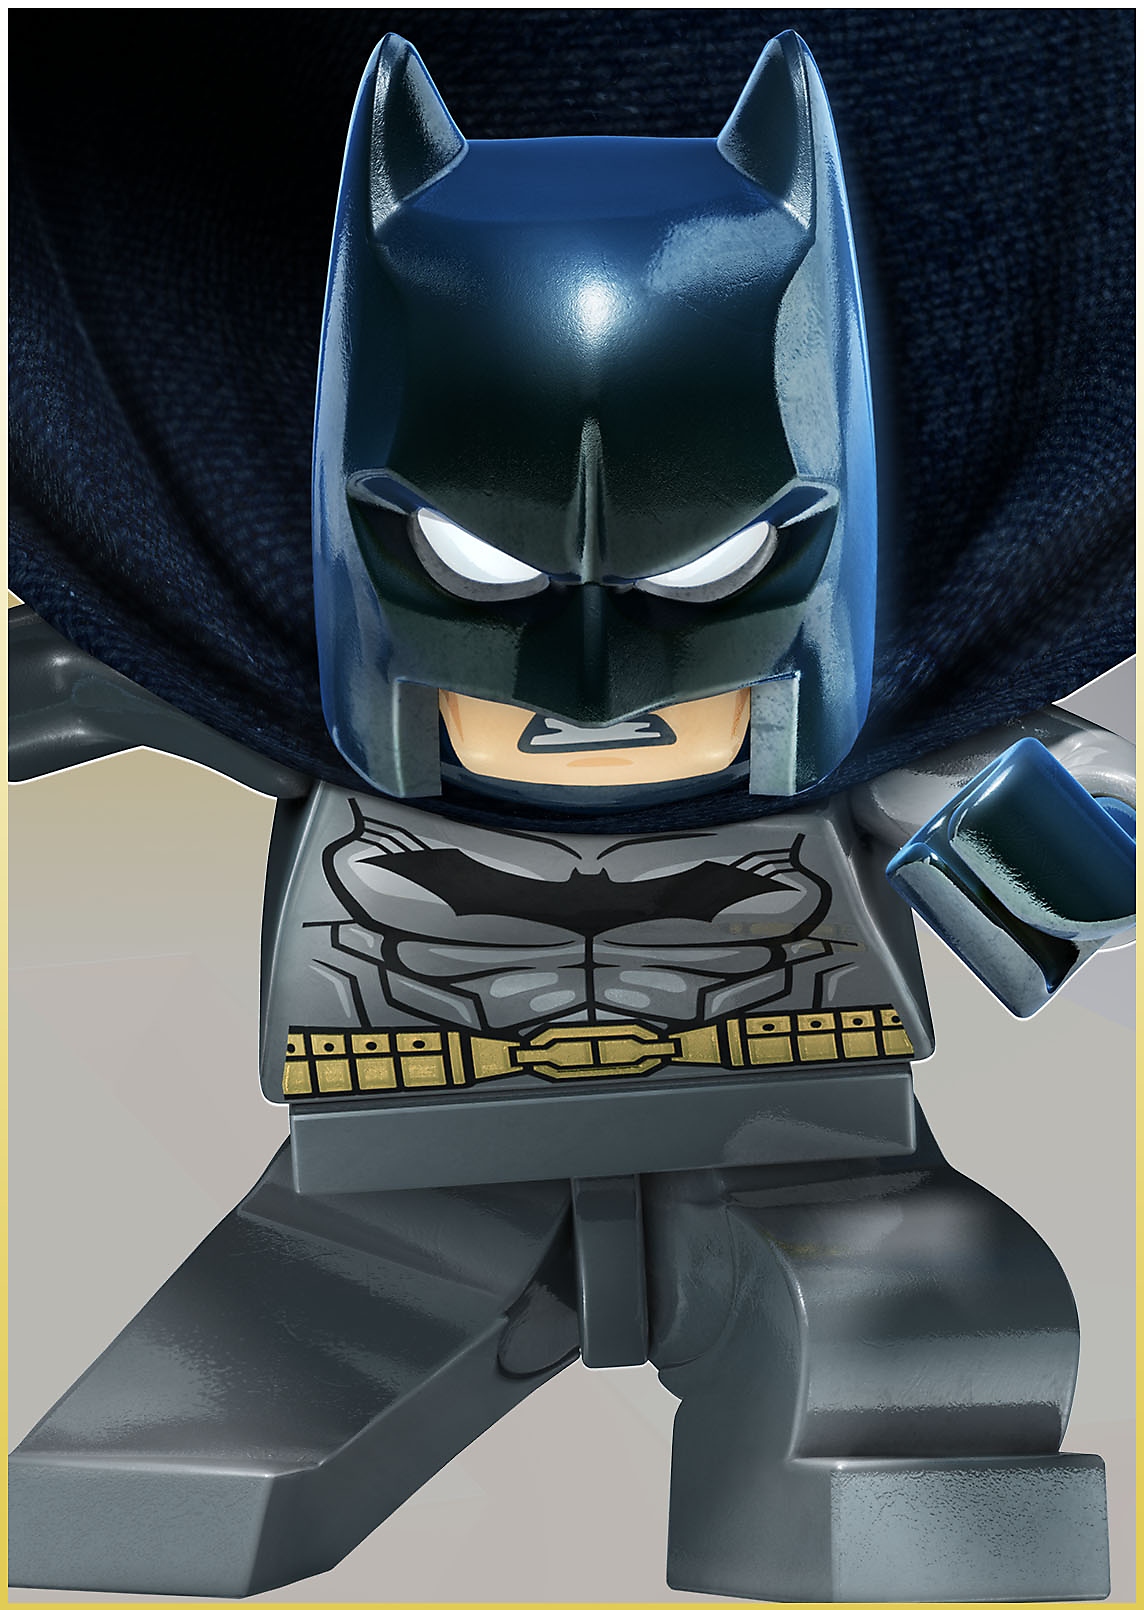 Lego-Batman stuper ned